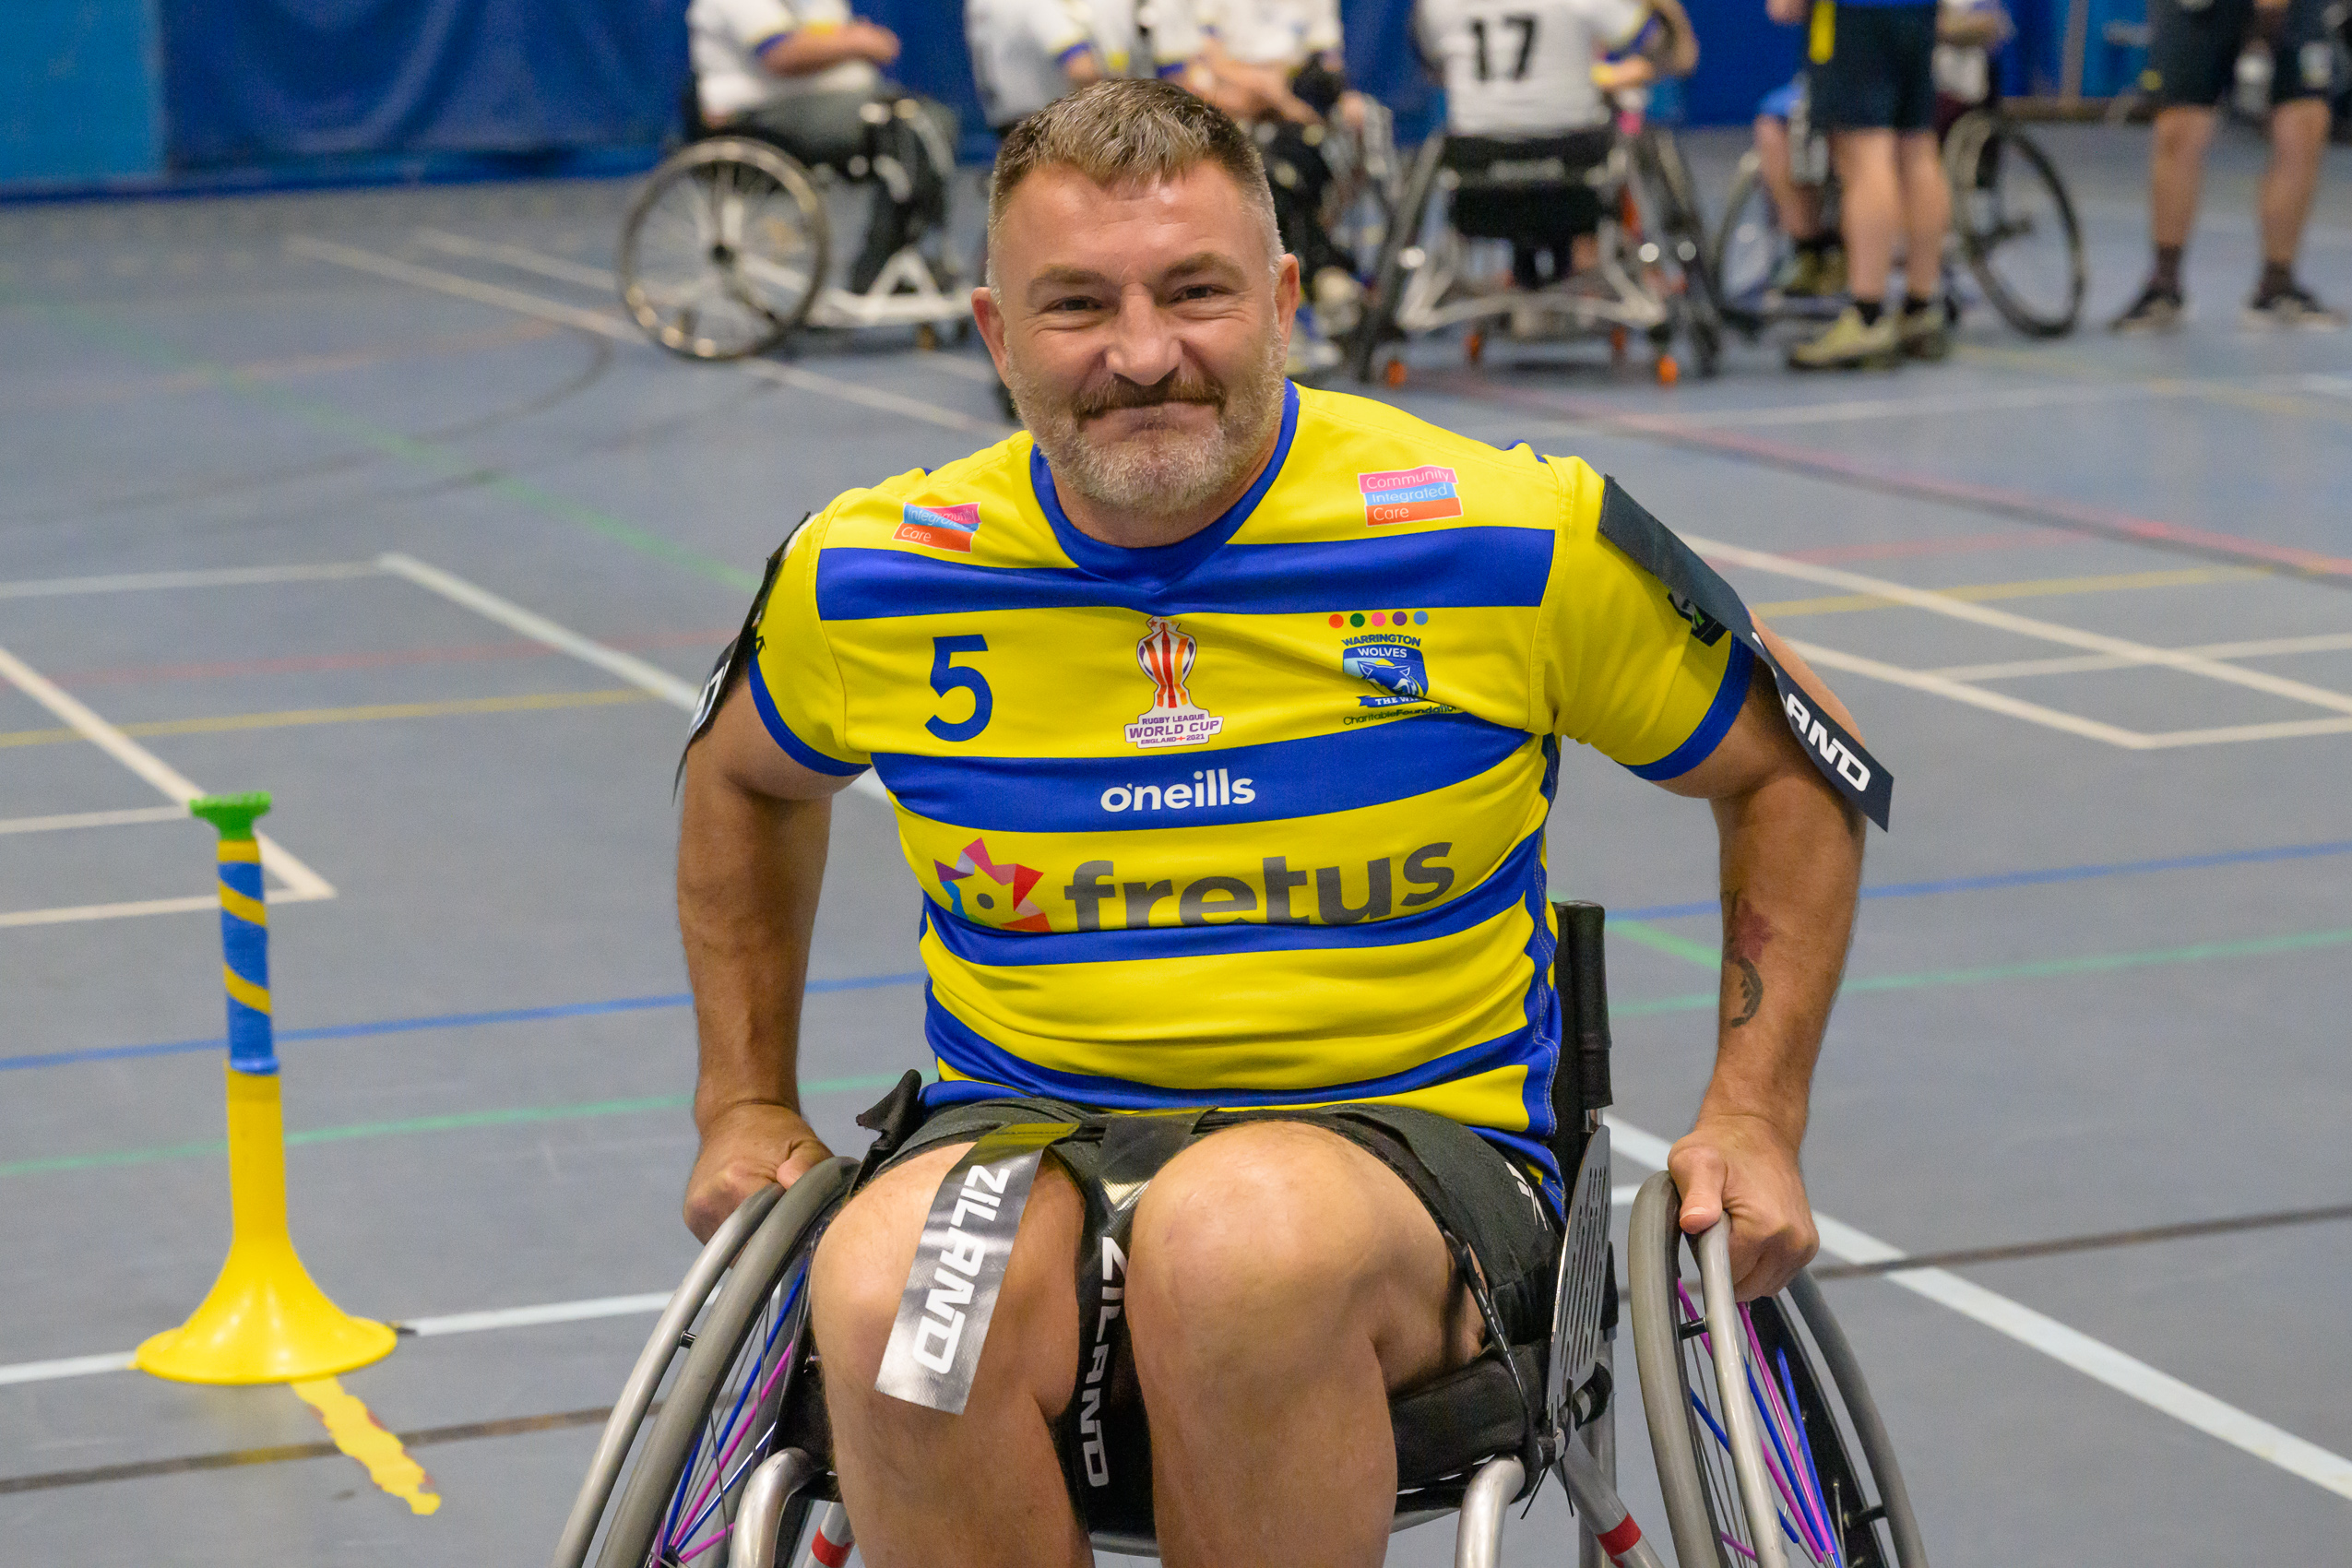 Paul Cullen plays wheelchair rugby league